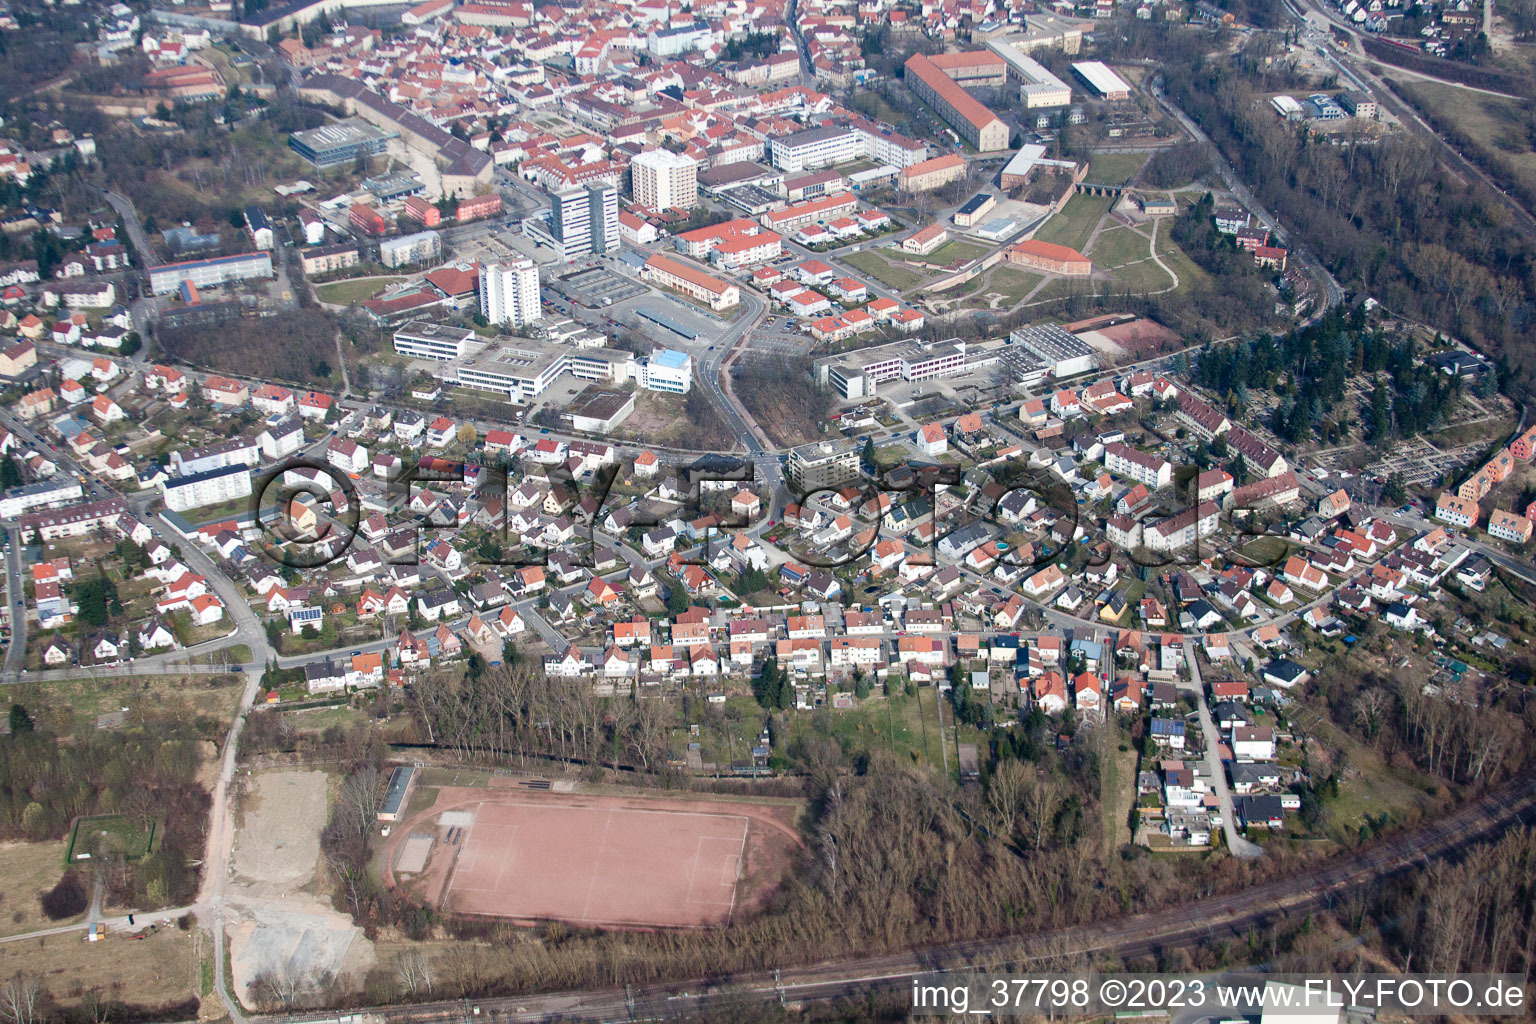 Bird's eye view of Germersheim in the state Rhineland-Palatinate, Germany